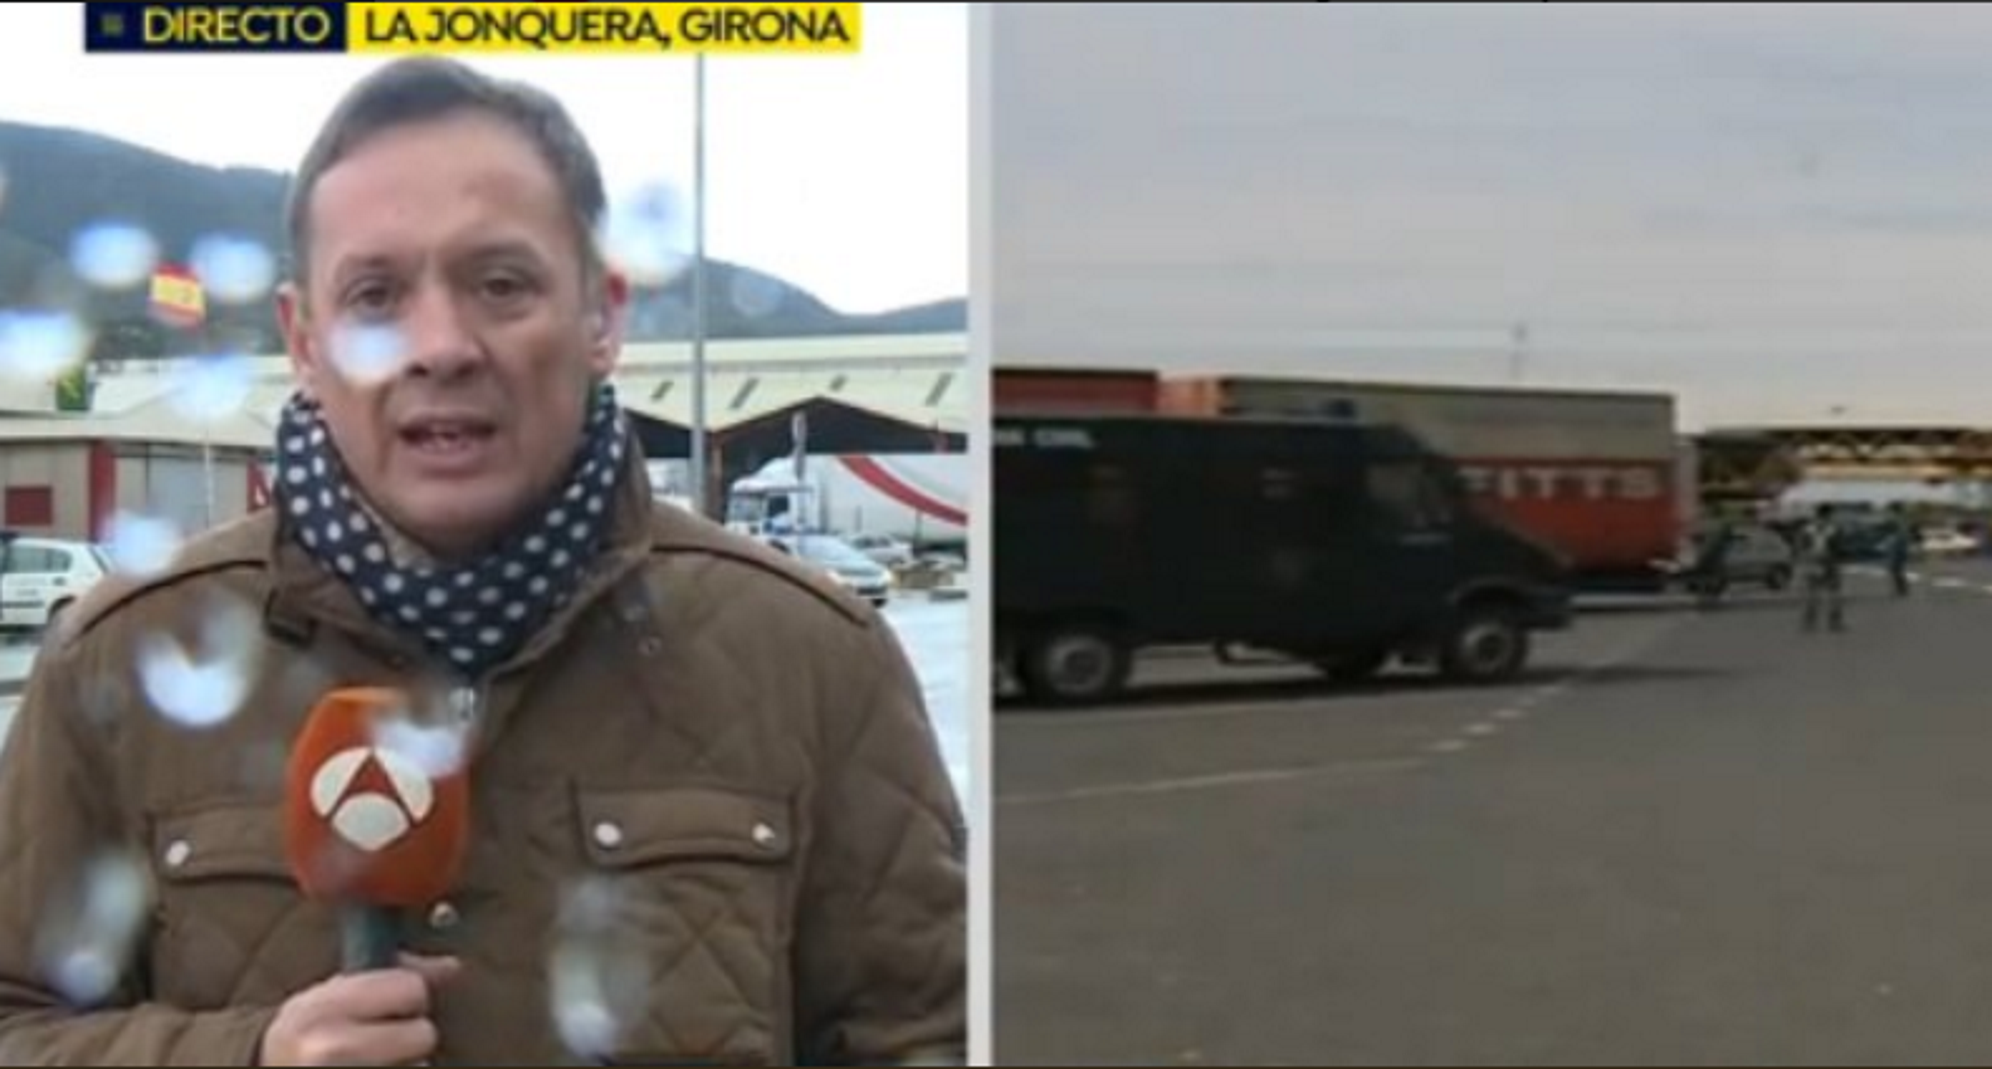 Allau d'ironies per l'operatiu policial a la frontera per si ve Puigdemont